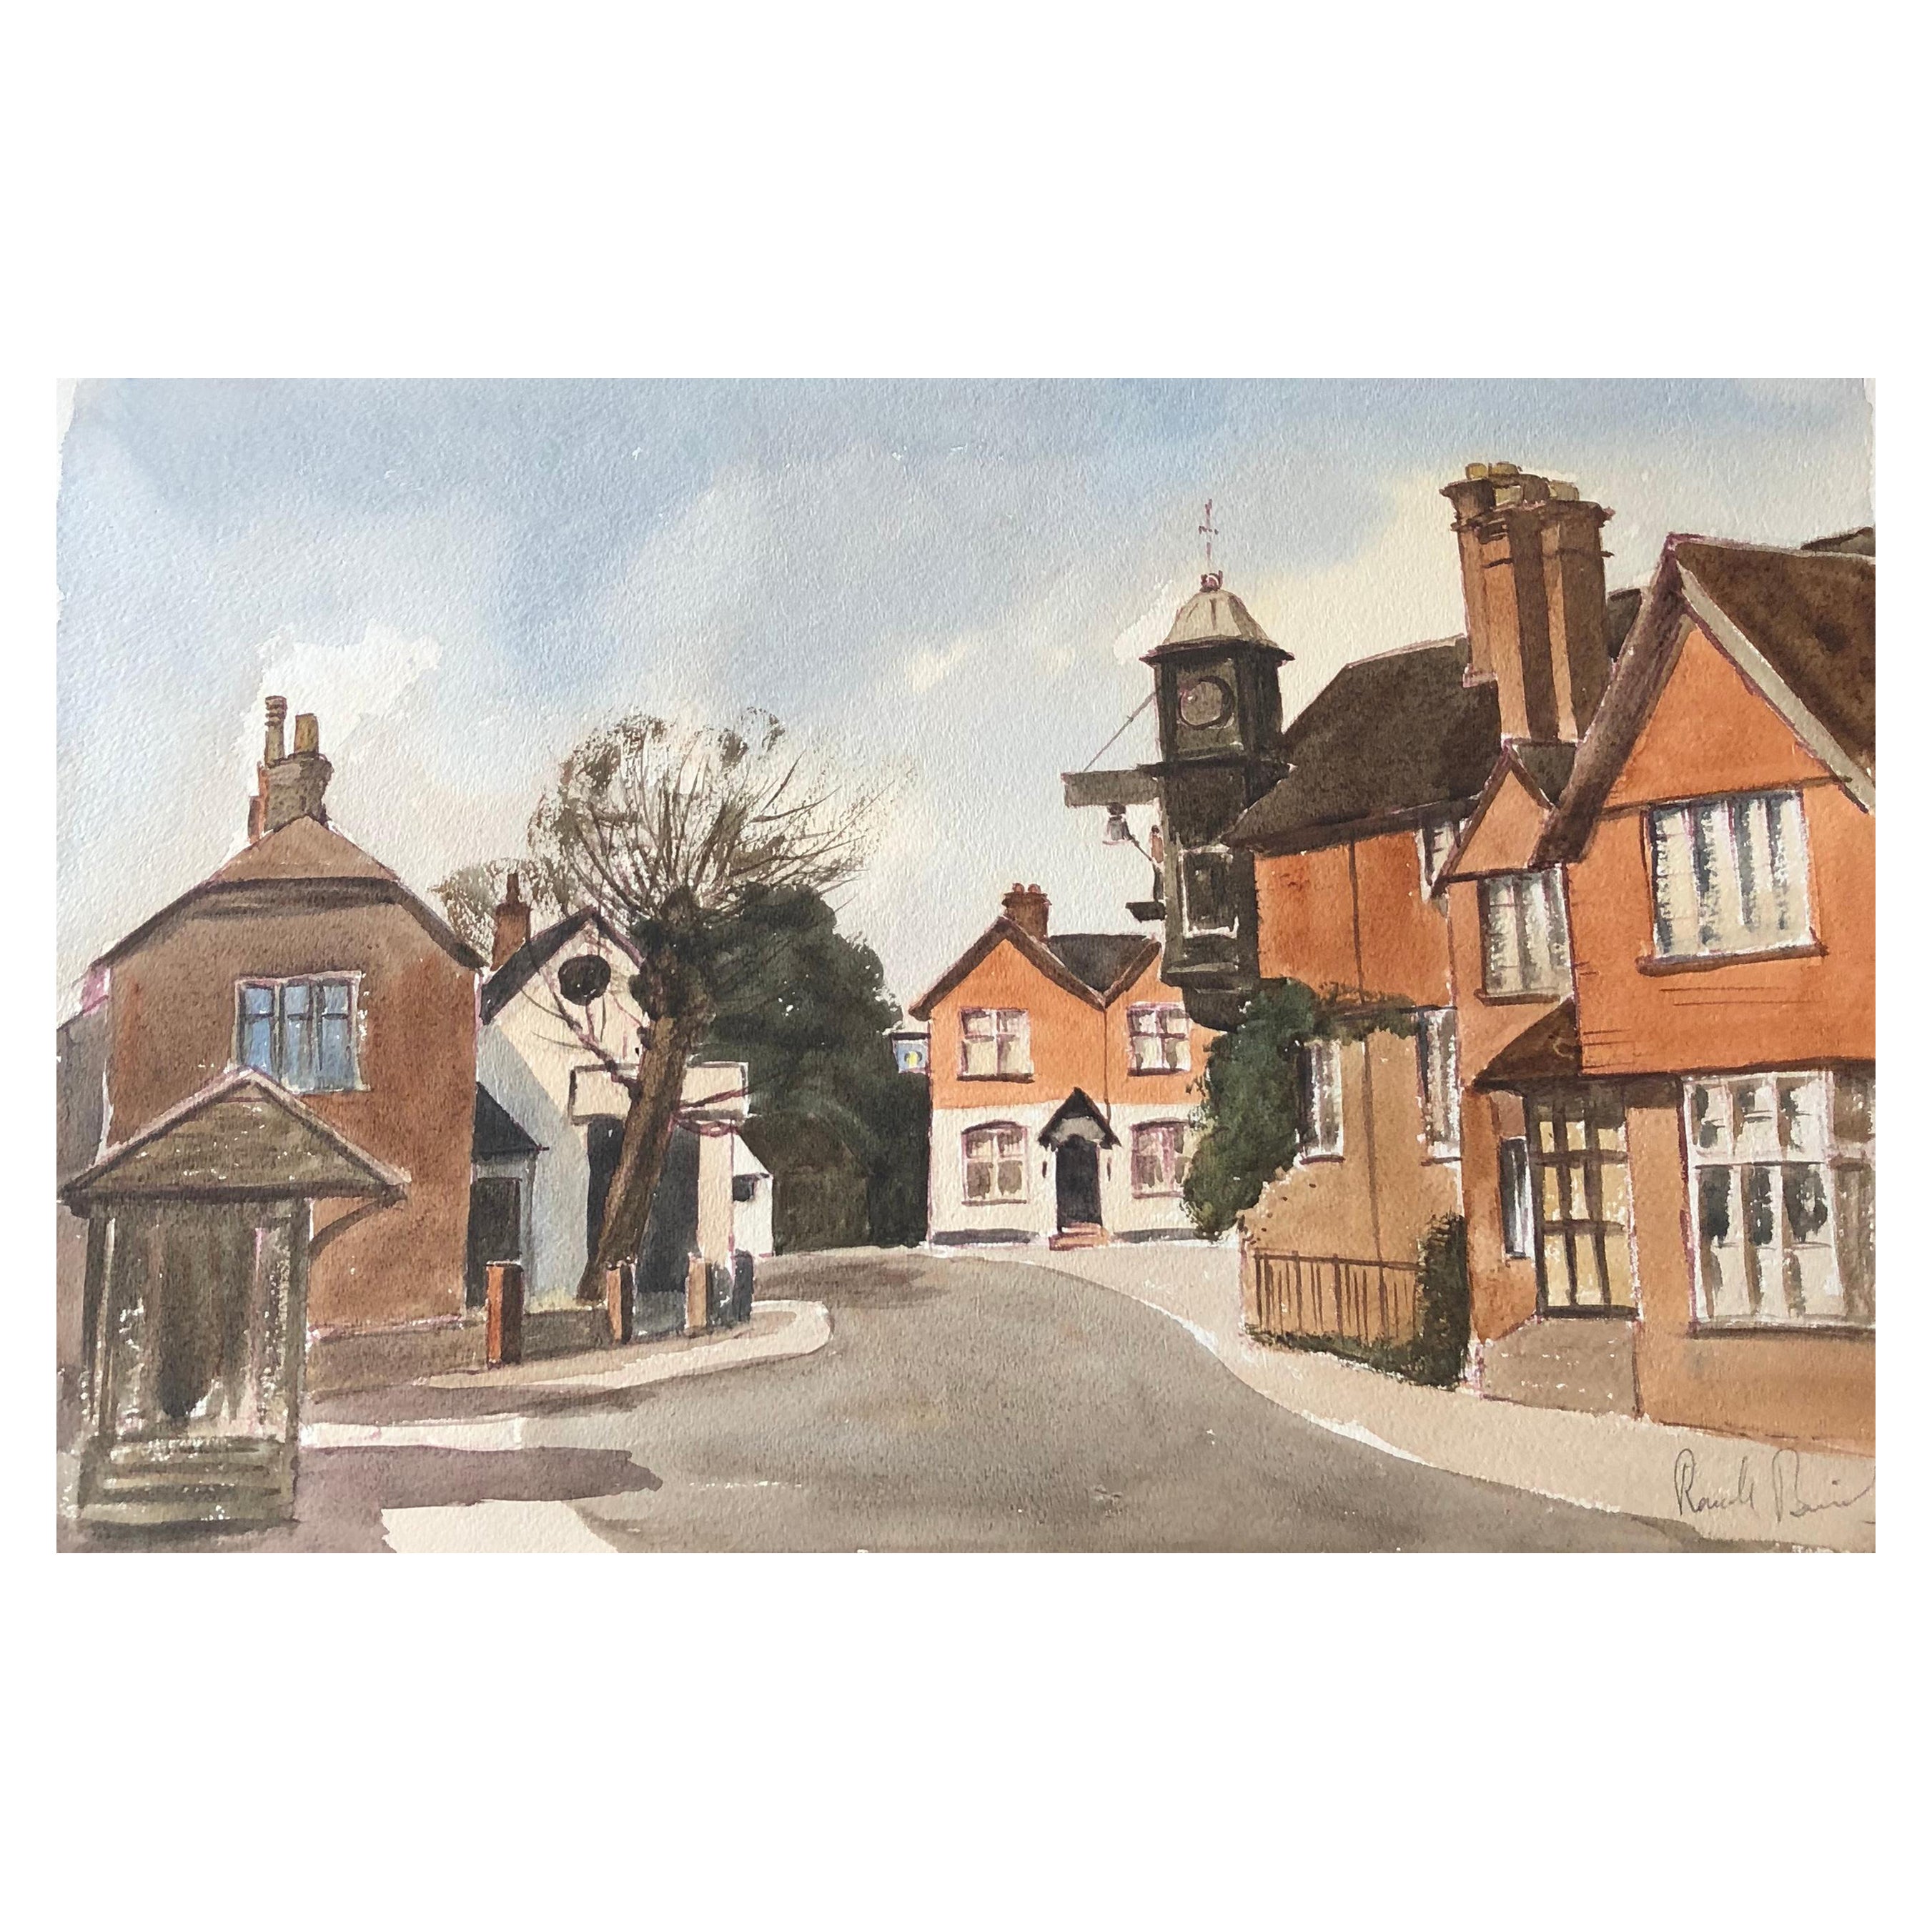 Clock Tower, English Town, Signed Original British Watercolour Painting